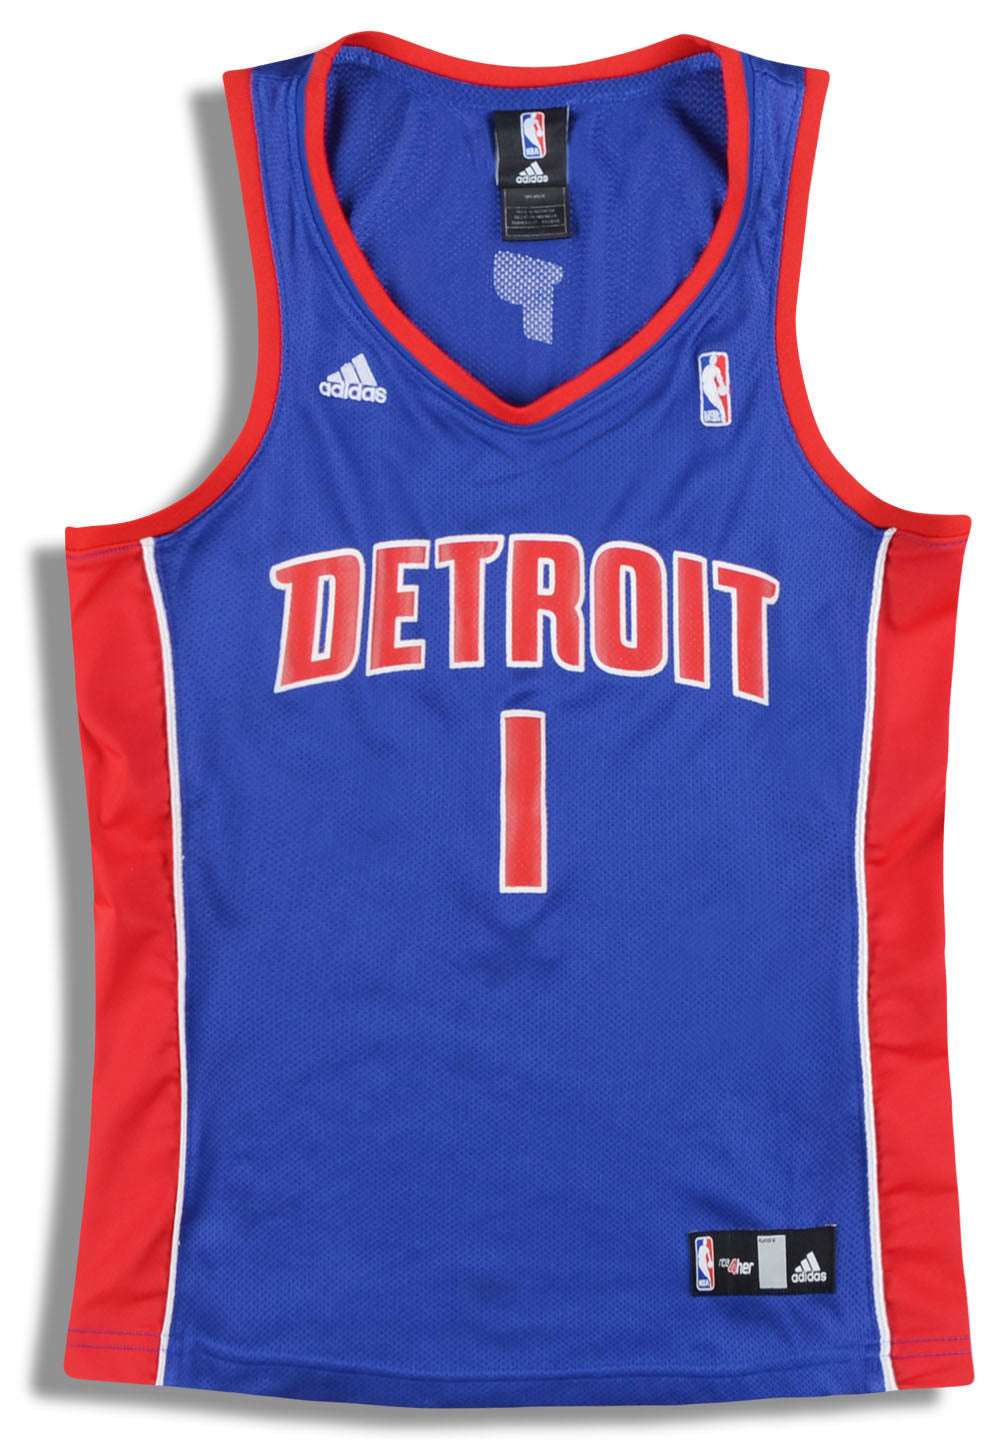 Buy Adidas NBA IVERSON #1 Allen Iverson PISTONS Detroit Pistons